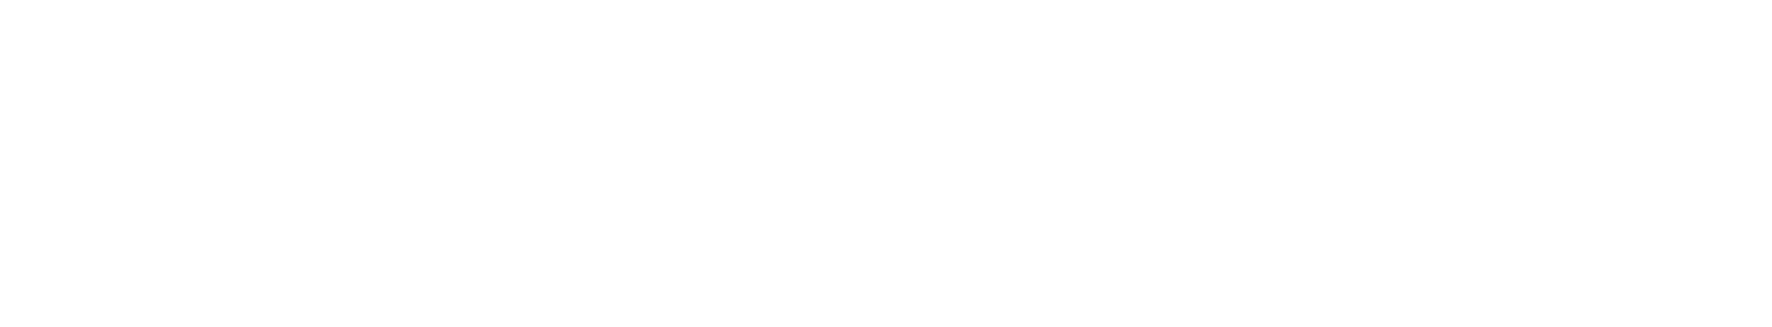 AMPI Logo nuevo